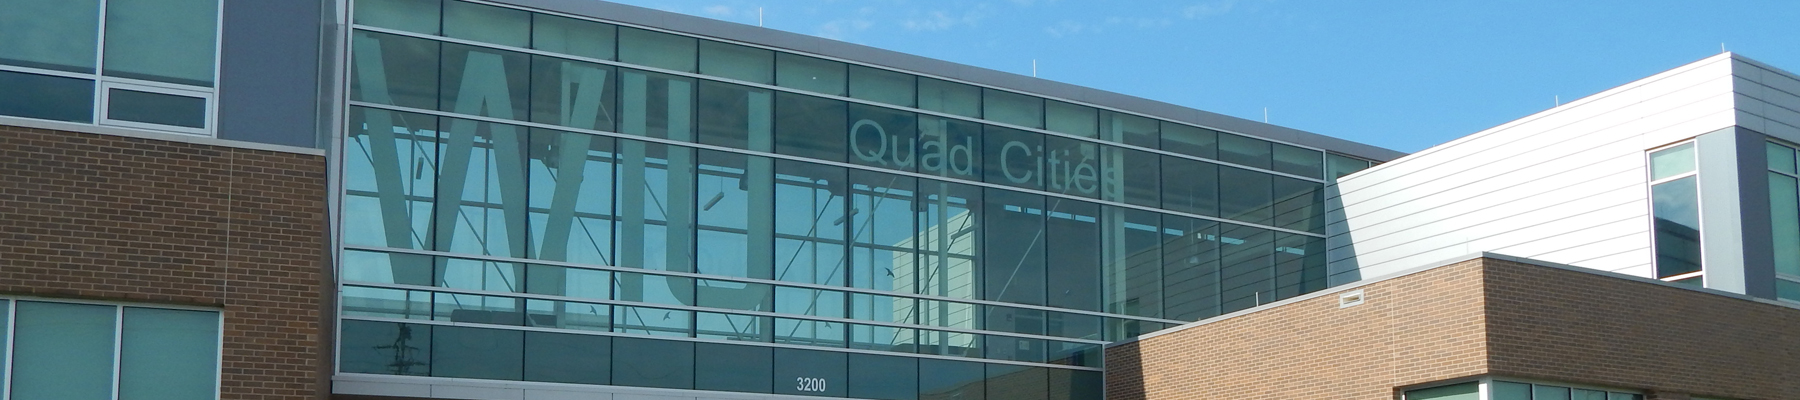 UTECH Quad Cities